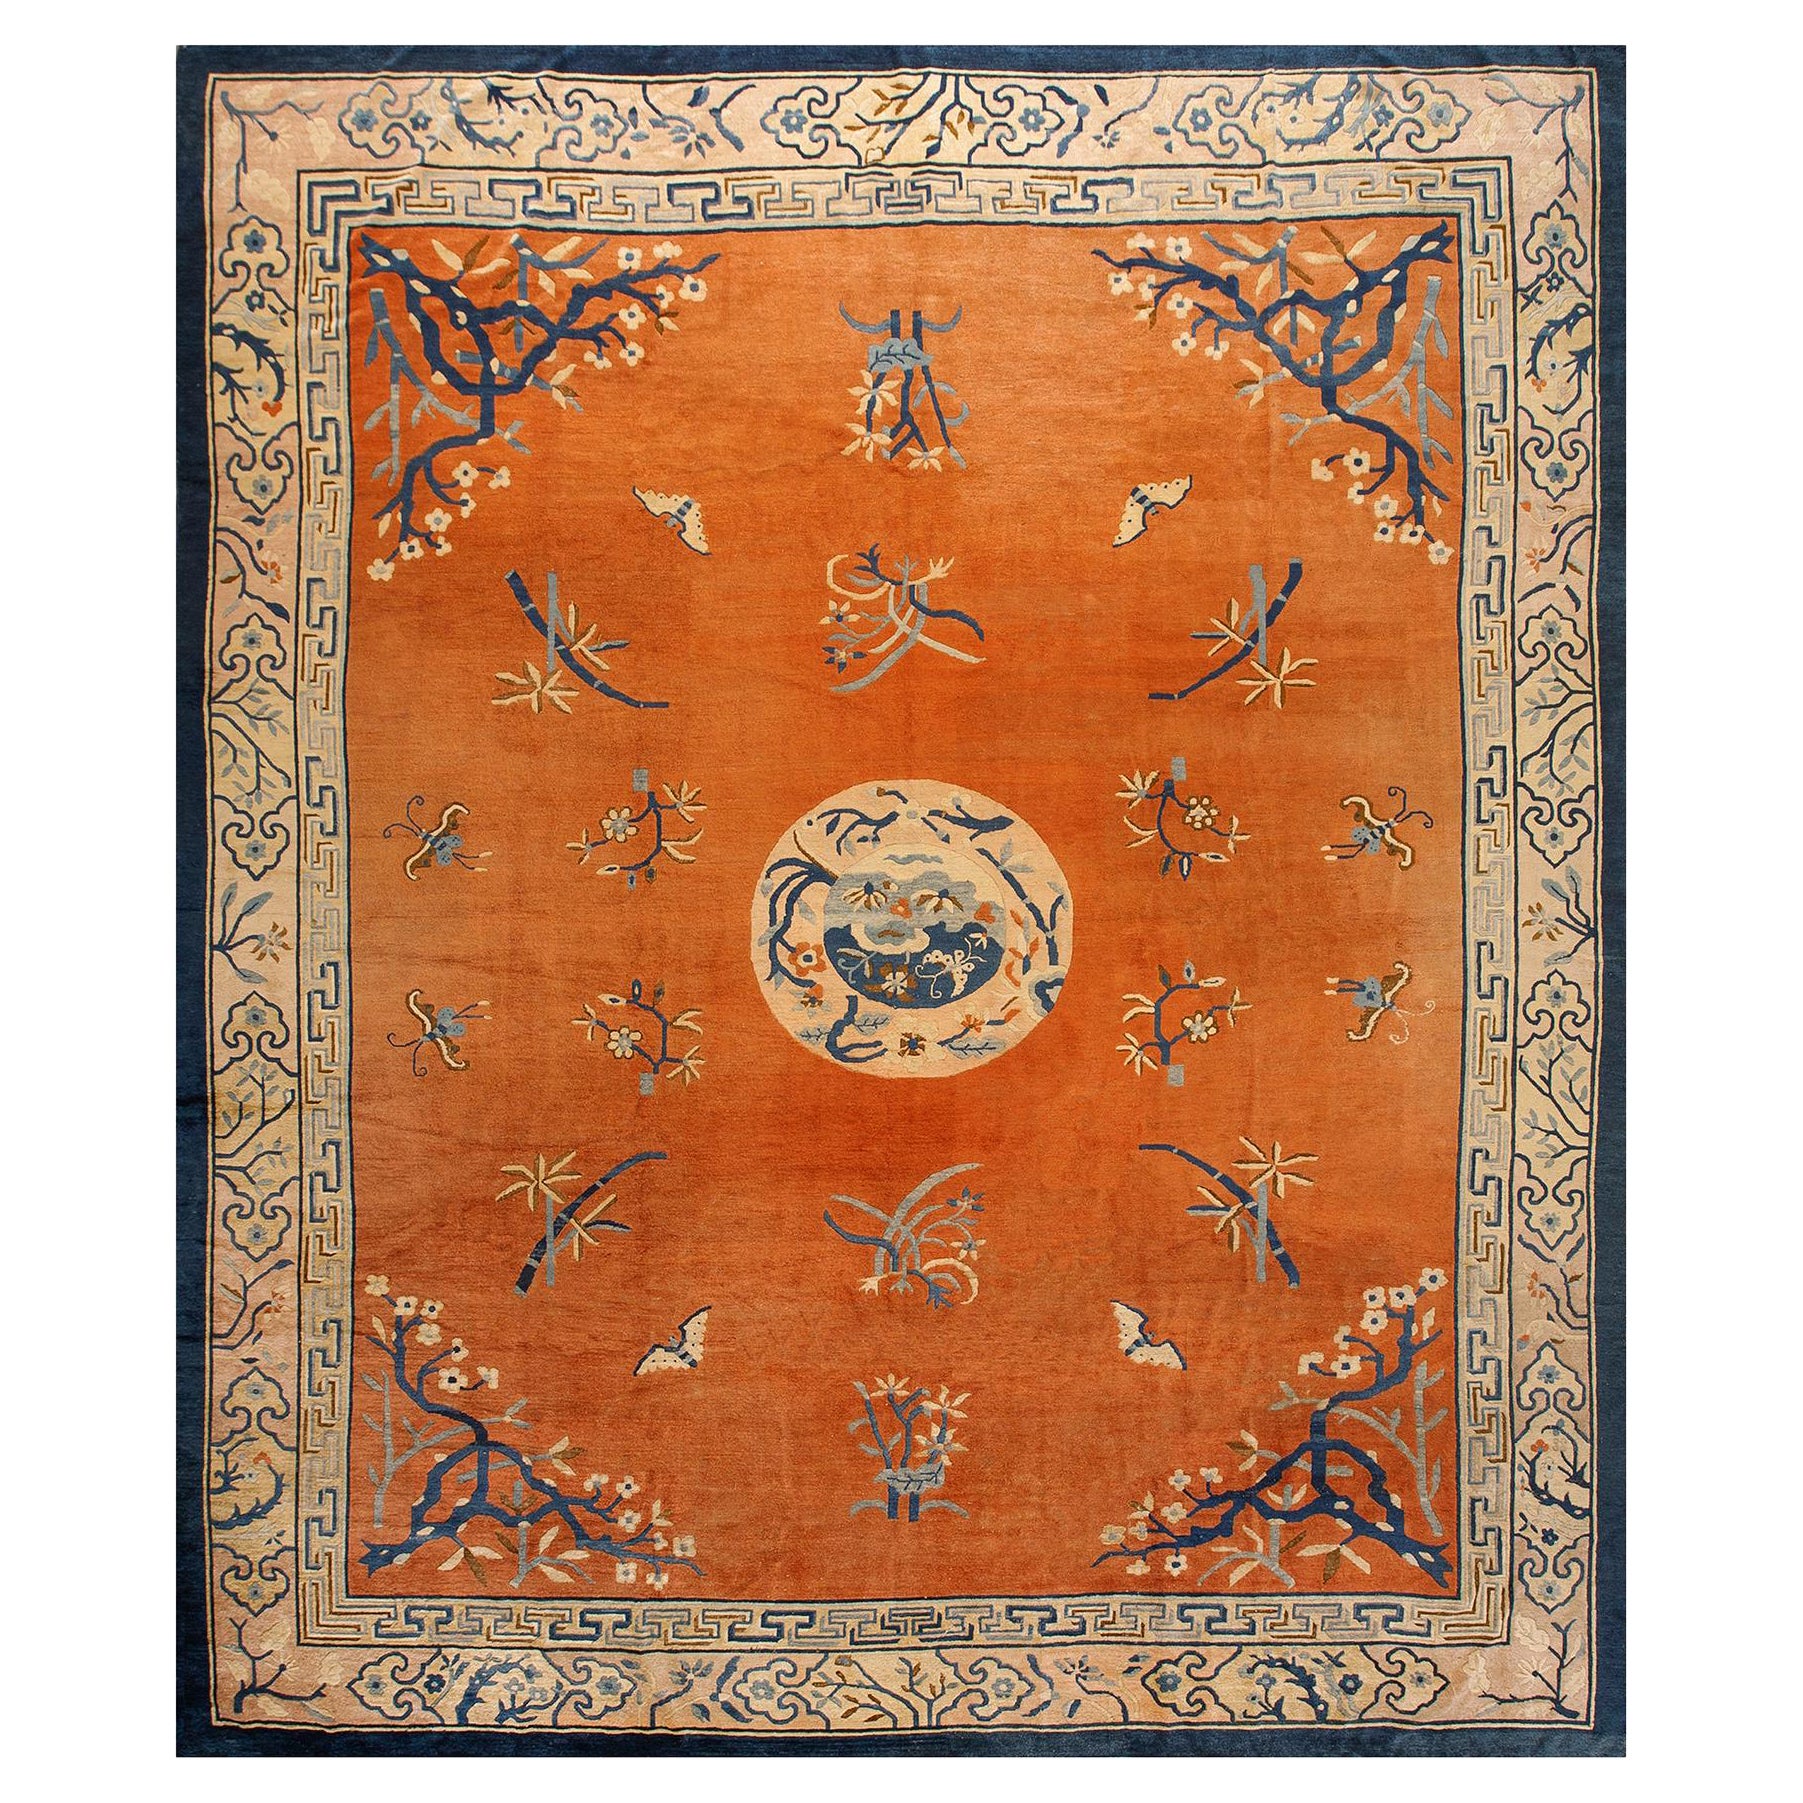 19th Century Chinese Peking Carpet ( 12'4" x 14'6" - 375 x 420 cm )